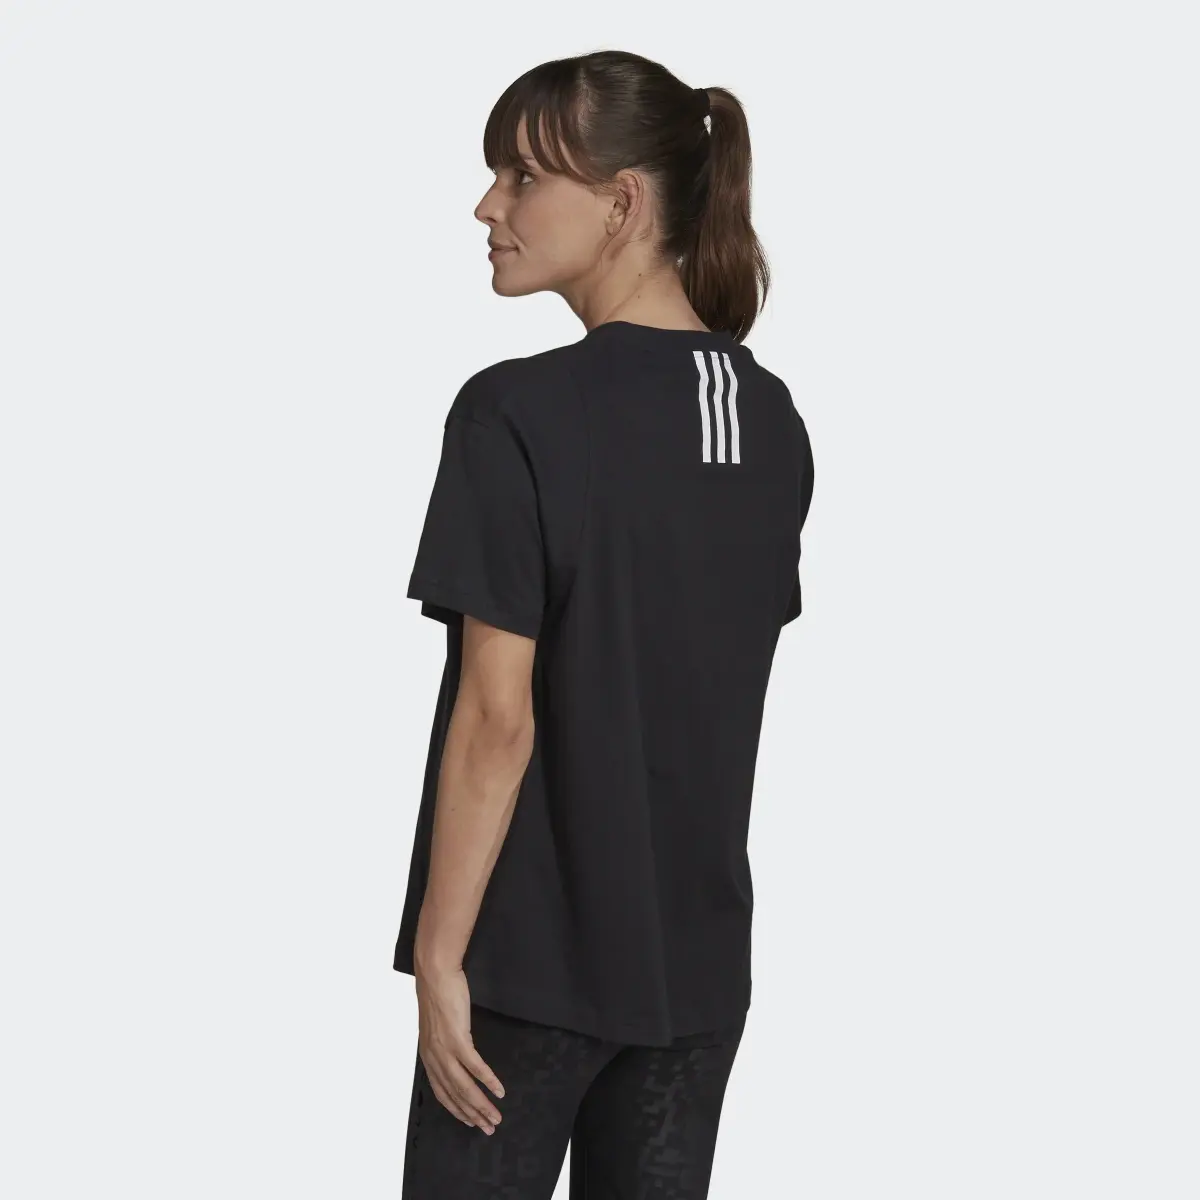 Adidas T-shirt Curta adidas x Karlie Kloss. 3